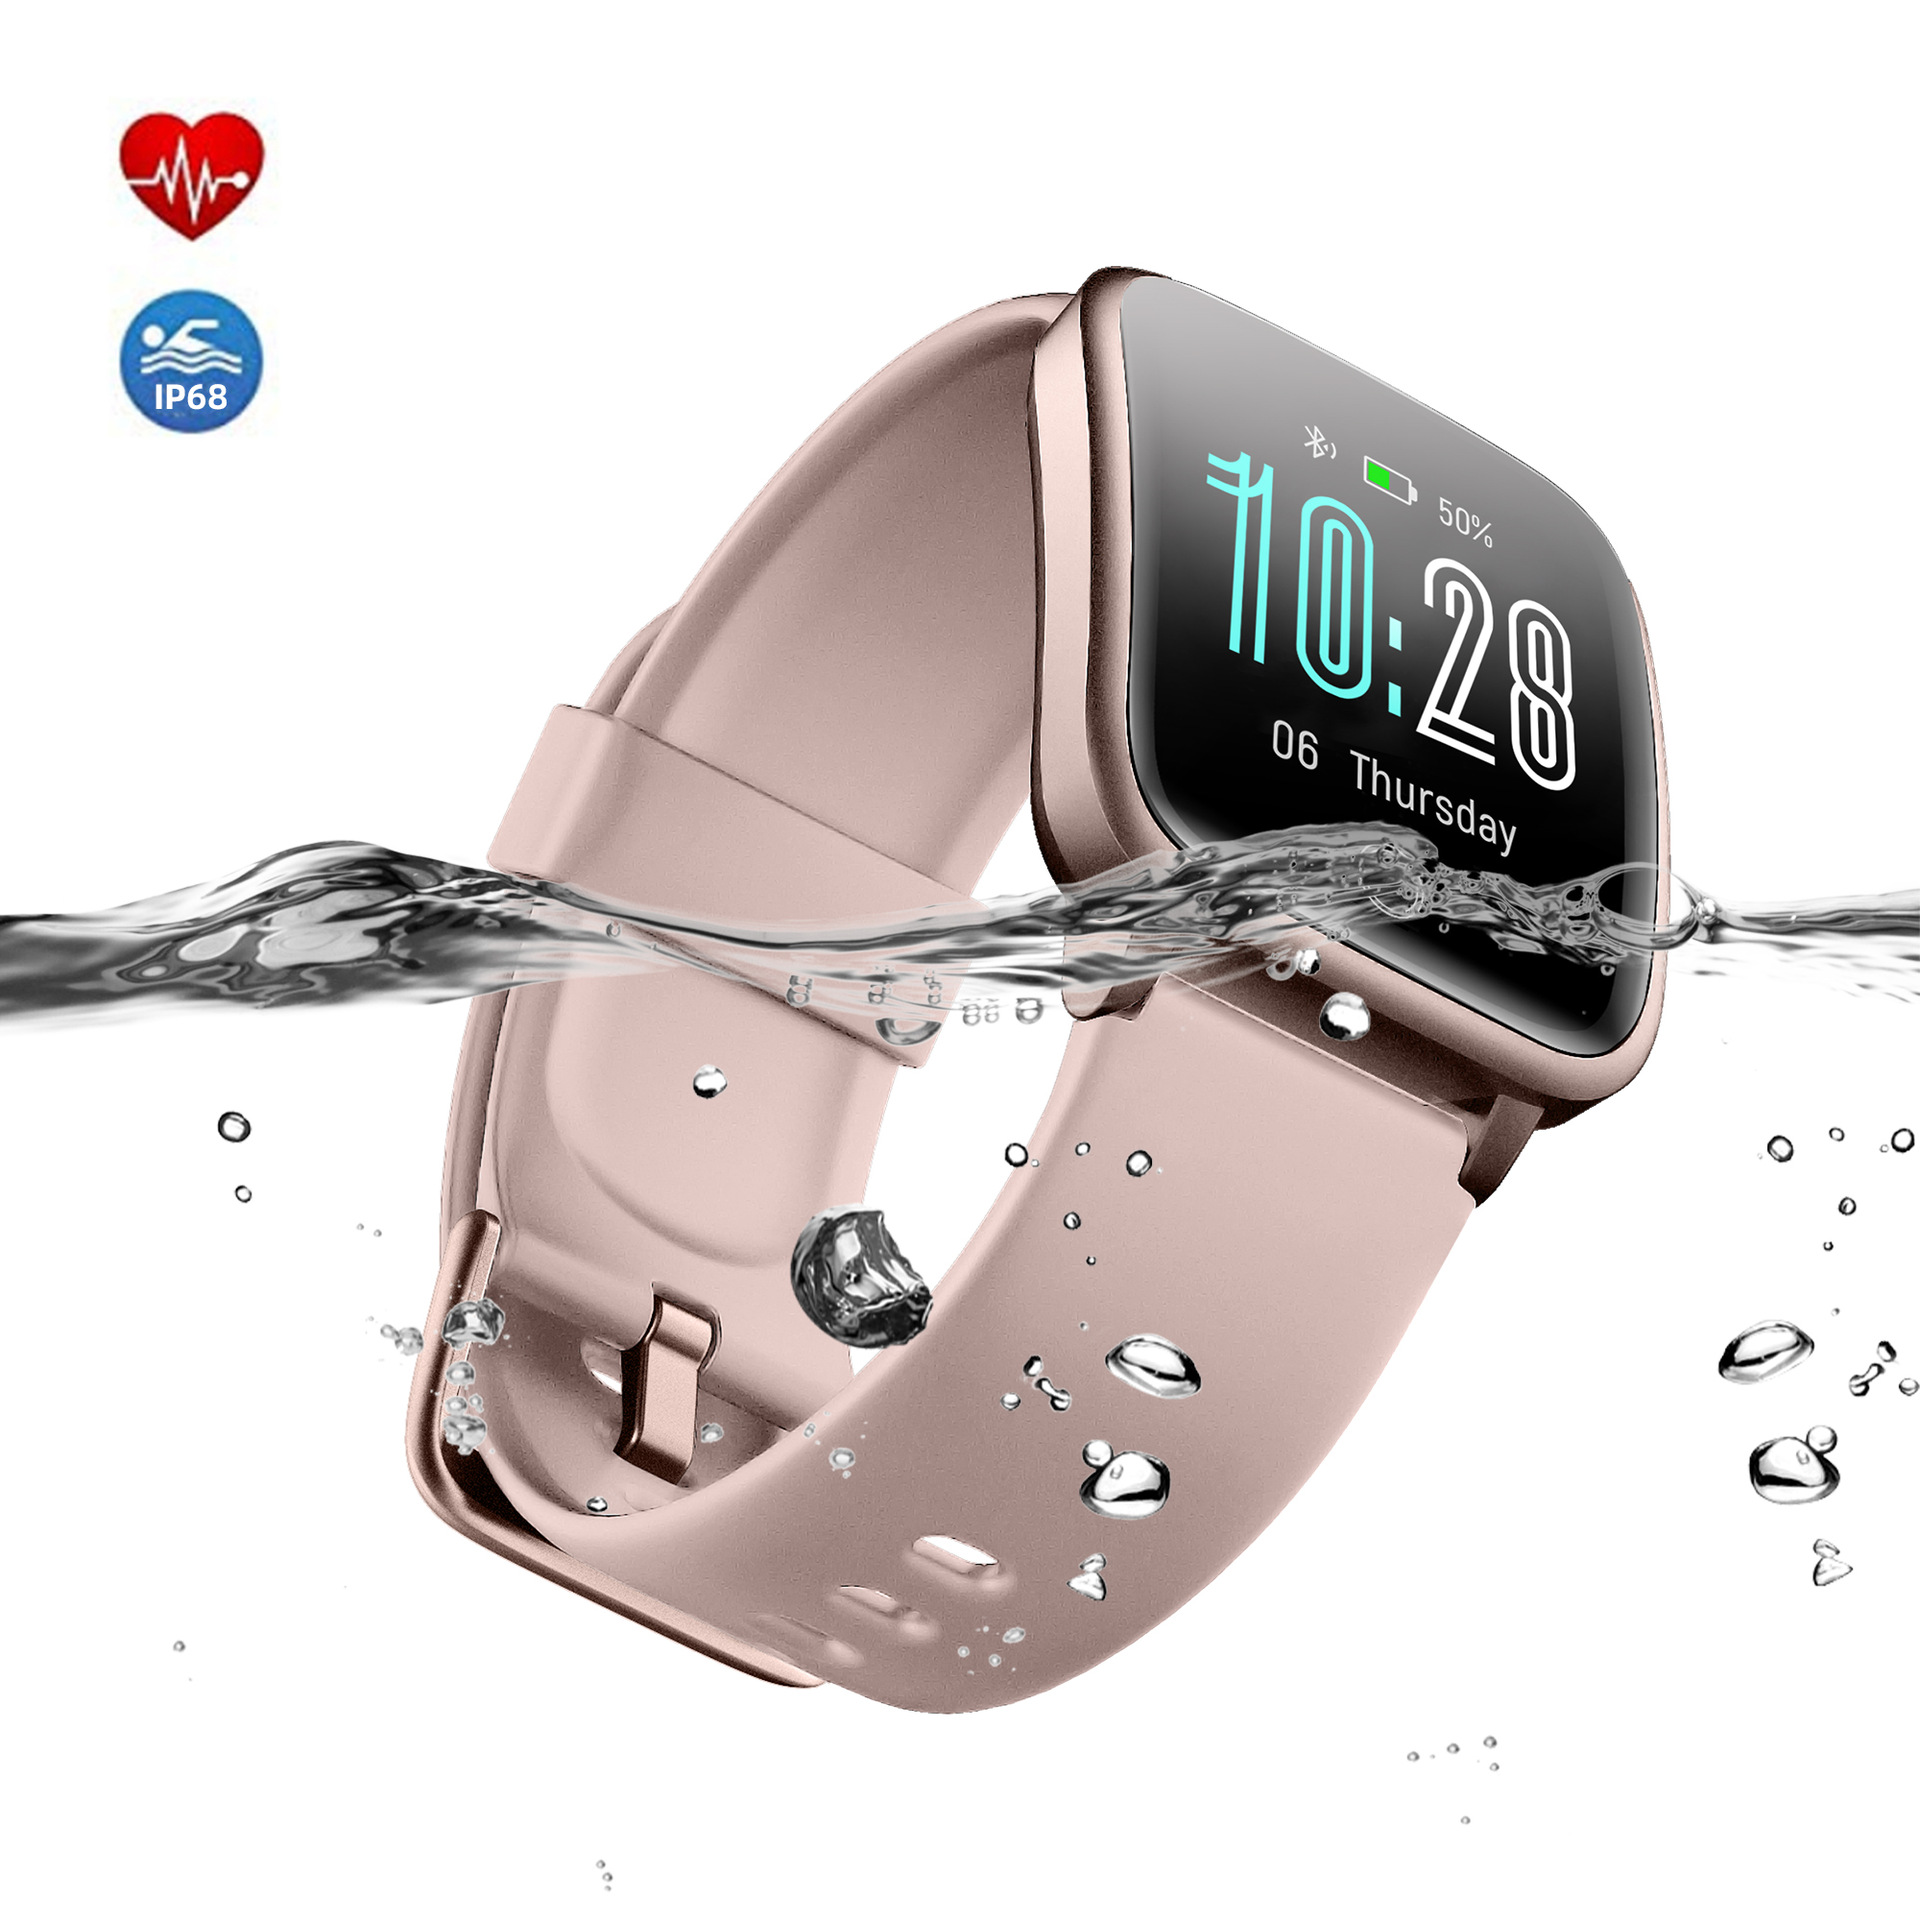 ID205S Aidu Technology New 1.3-inch Color Screen Heart Rate Waterproof Smart Fashion Sports Health Smart Watch